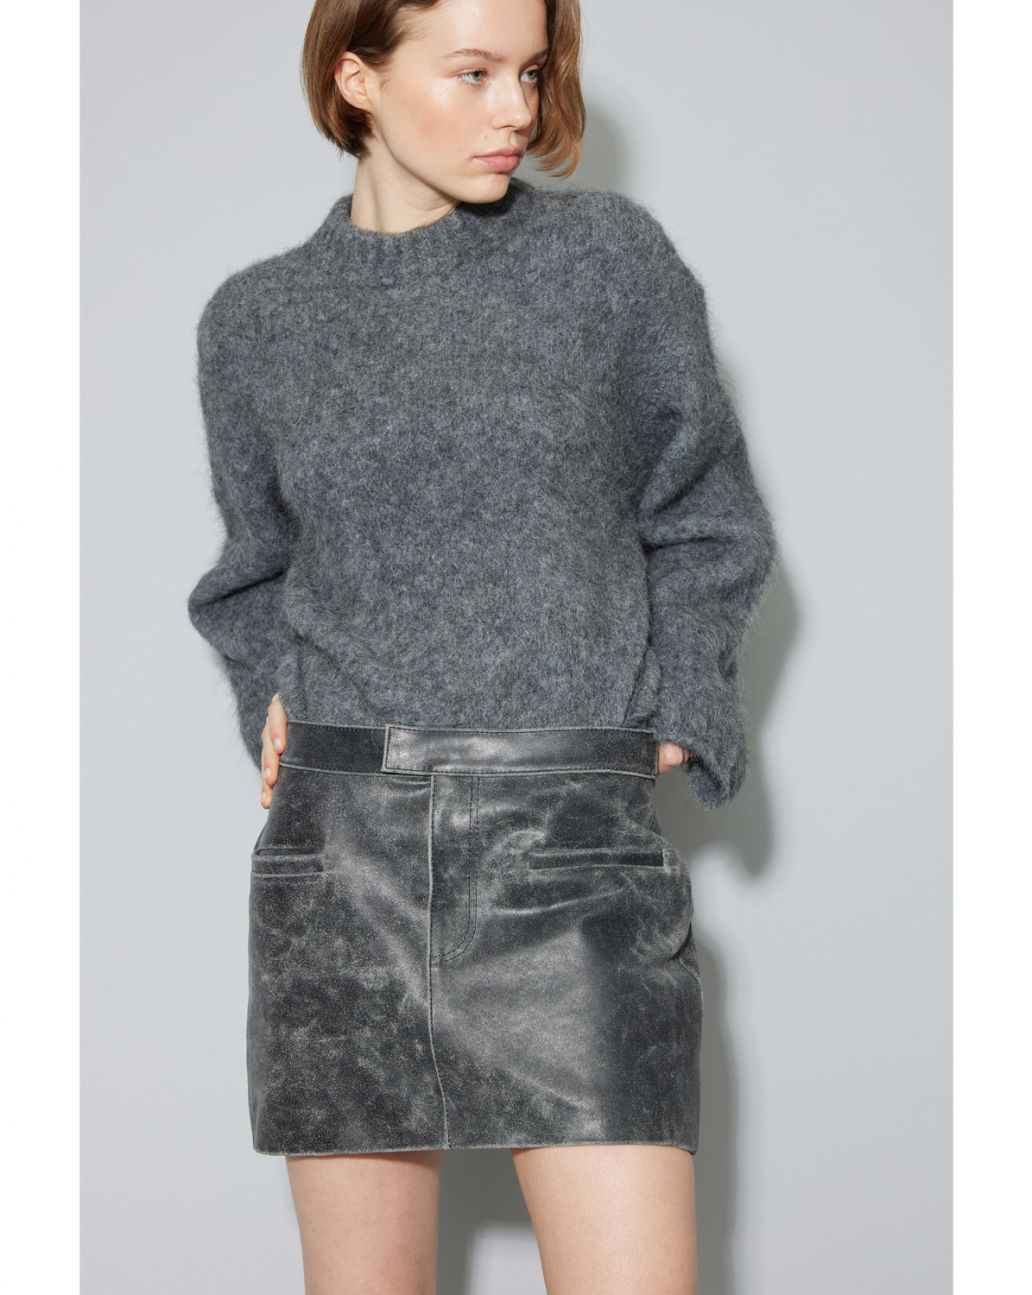 Oval Square Leather Mini Skirt